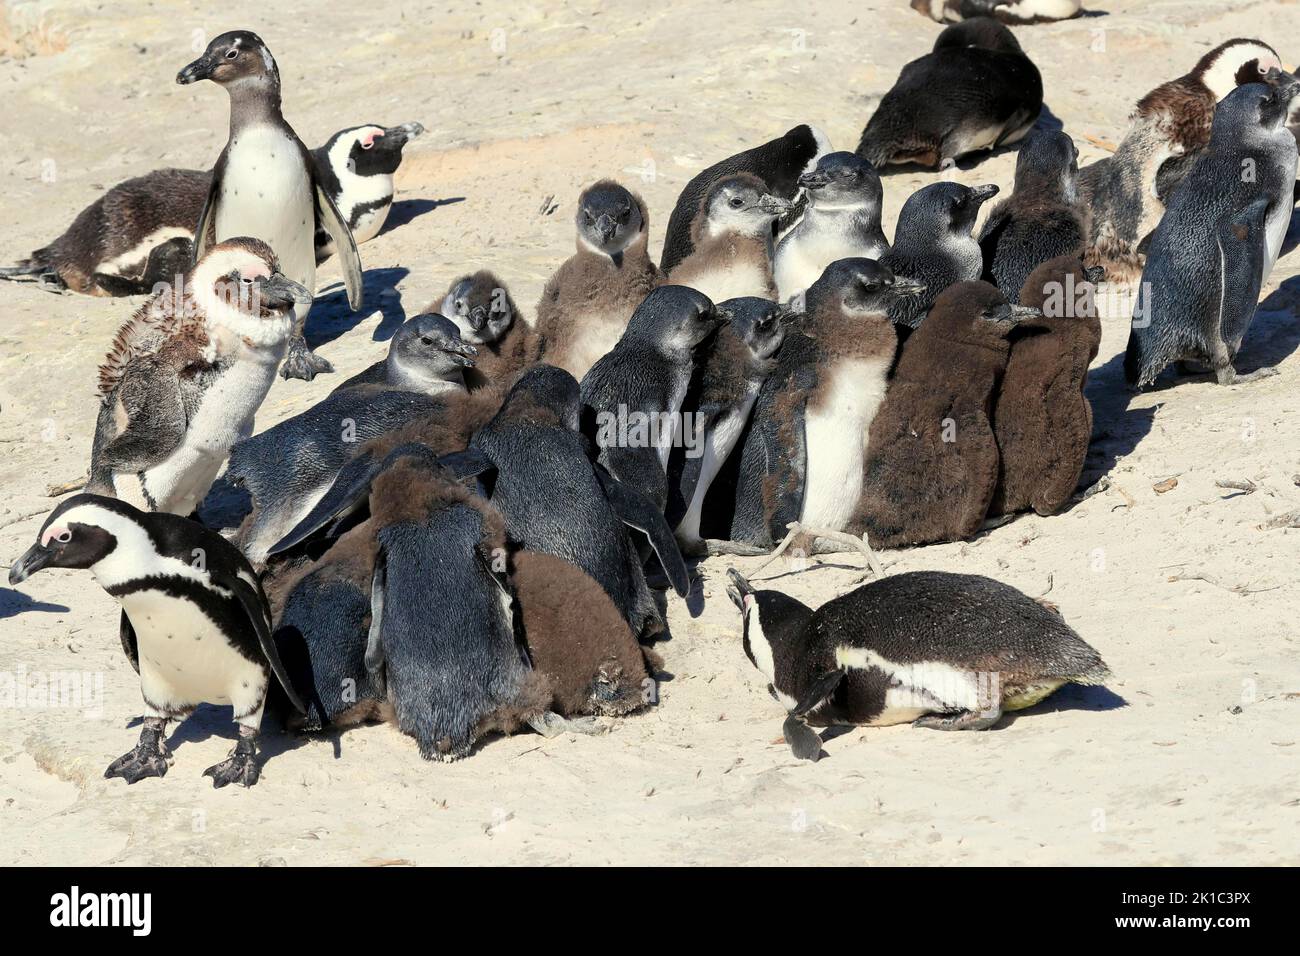 African penguin (Spheniscus demersus), juveniles, group, nursery, social behaviour, standing together, on the beach, Boulders Beach, Simonstown Stock Photo